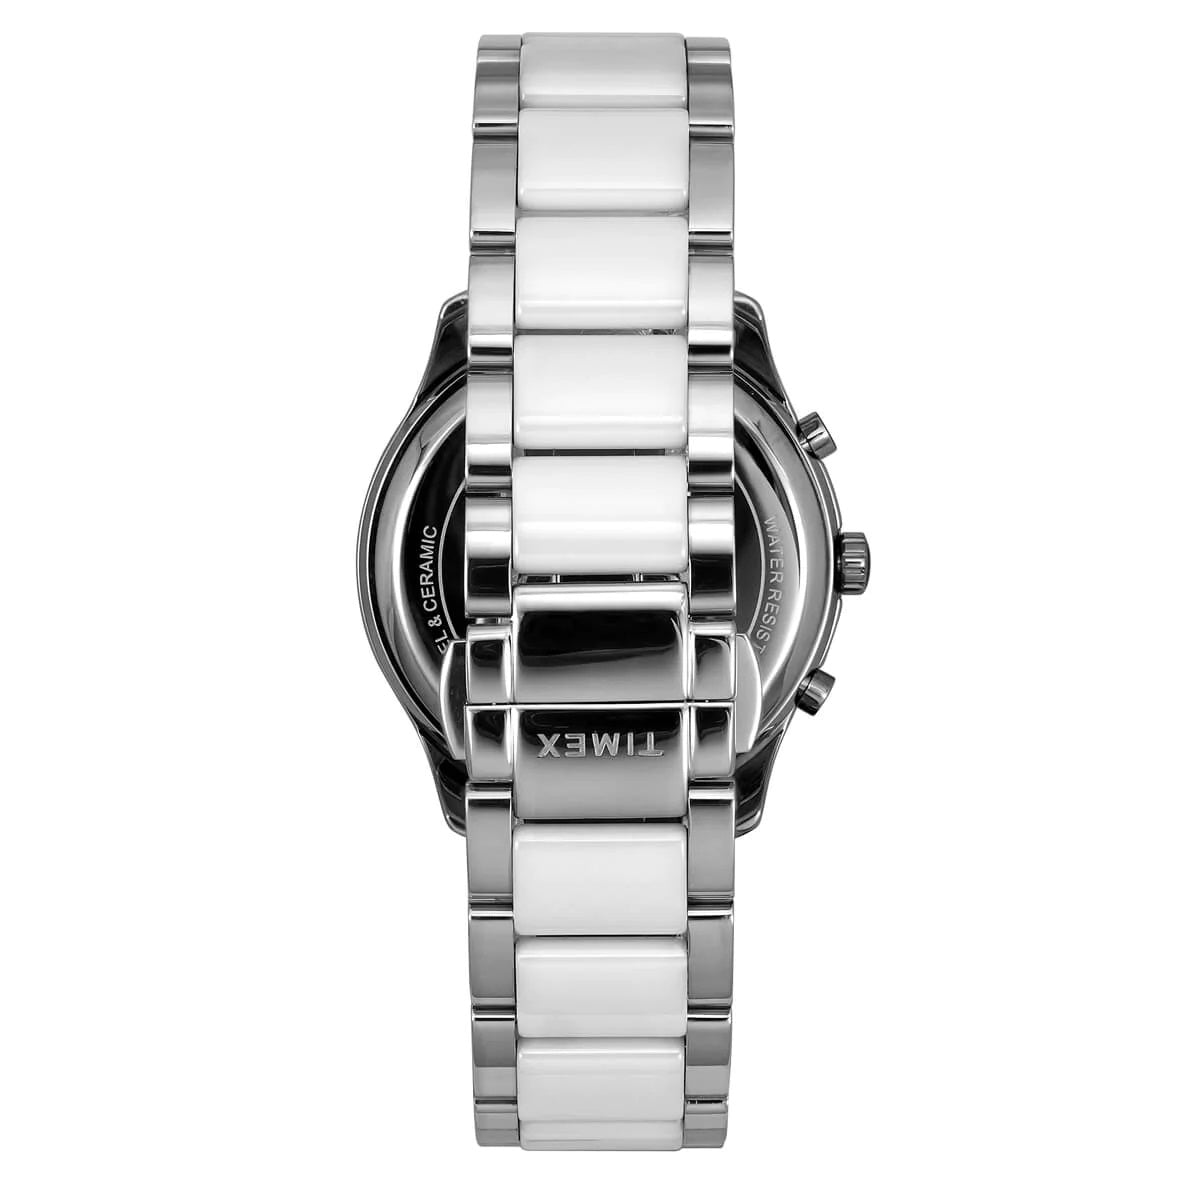 Timex Silver Dial Men Analog Watch - TWEG21700